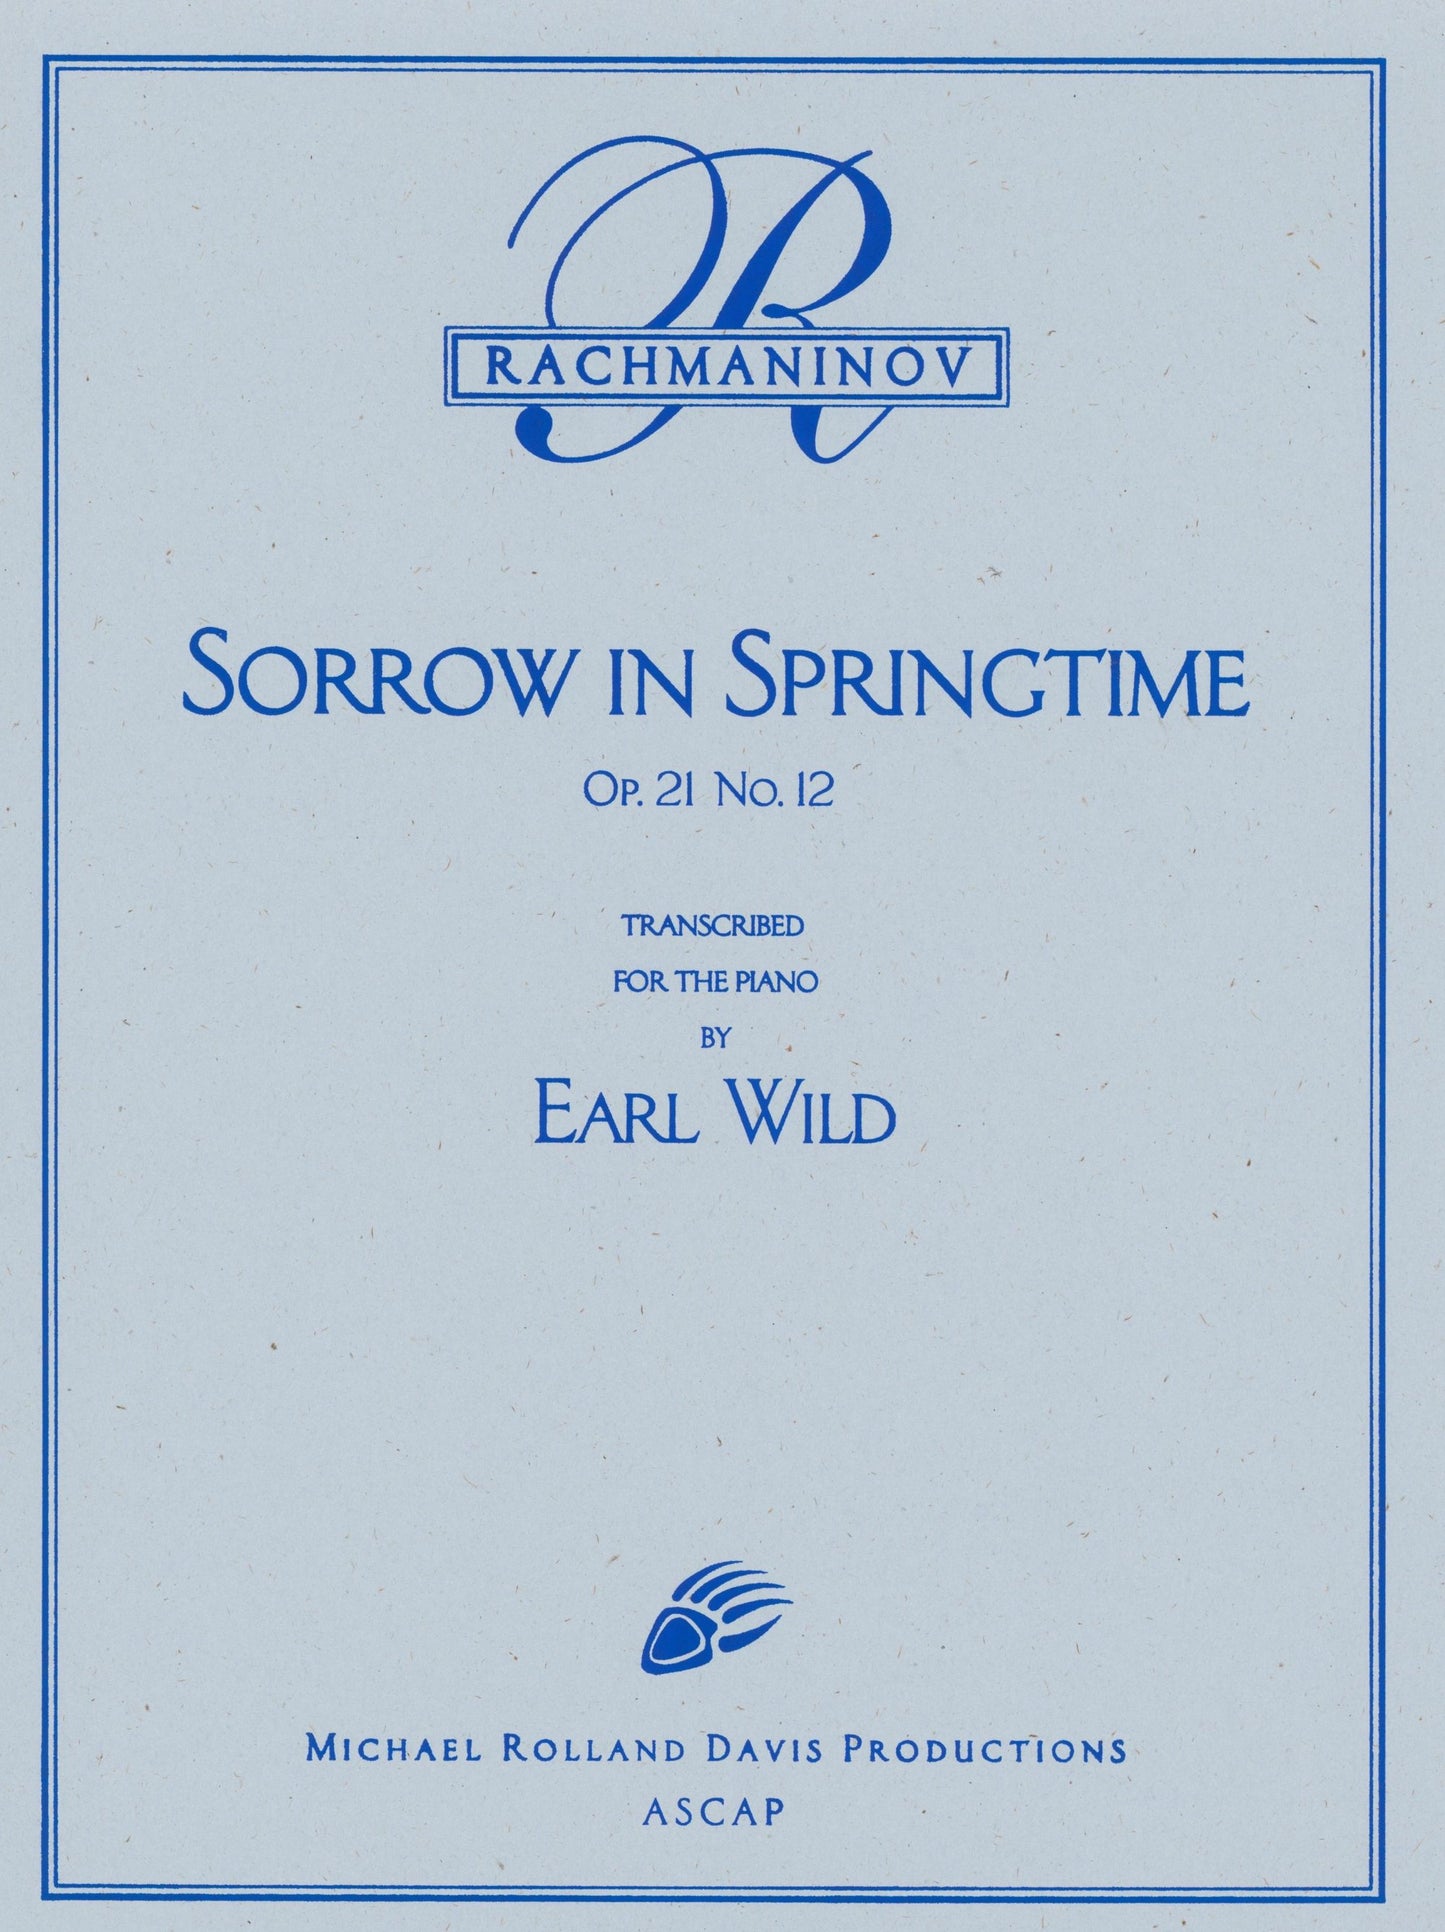 Rachmaninoff-Earl Wild: Sorrow in Springtime, Op. 21, No. 12